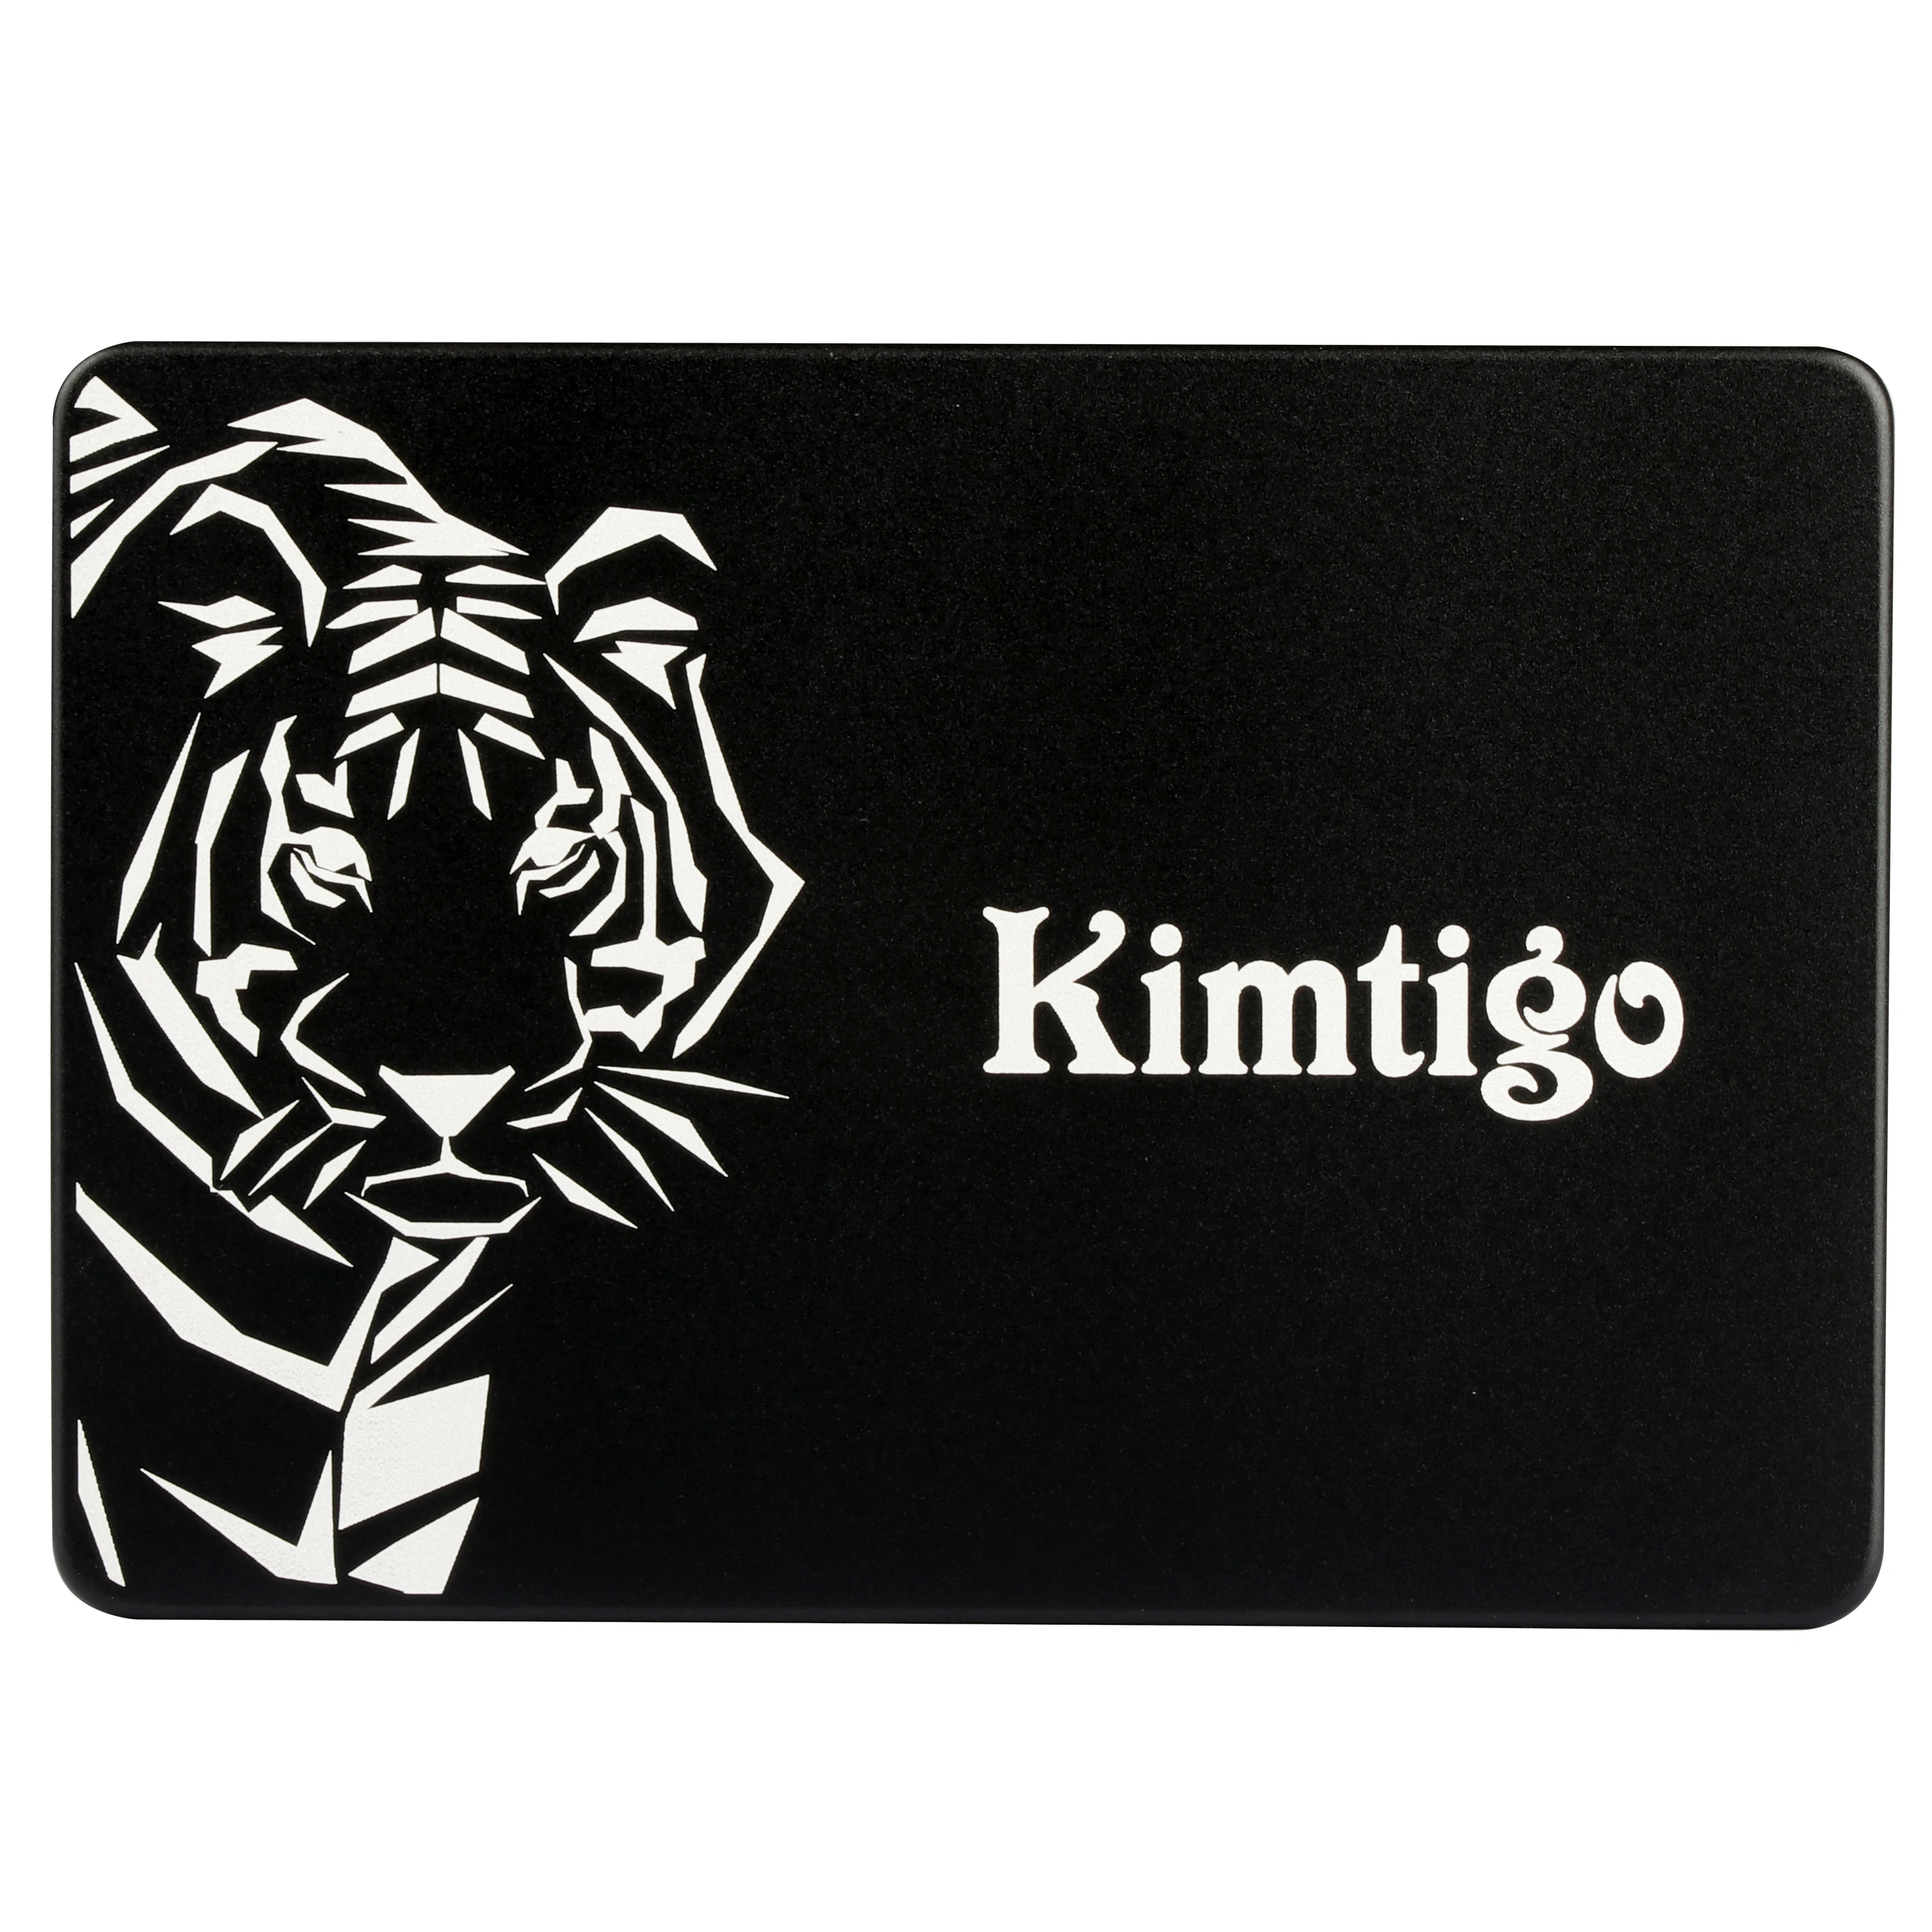 

SSD Kimtigo Cheap Price gaming SATA 3 SSD ssd 120GB/240GB/480GB solid hard drive, Black